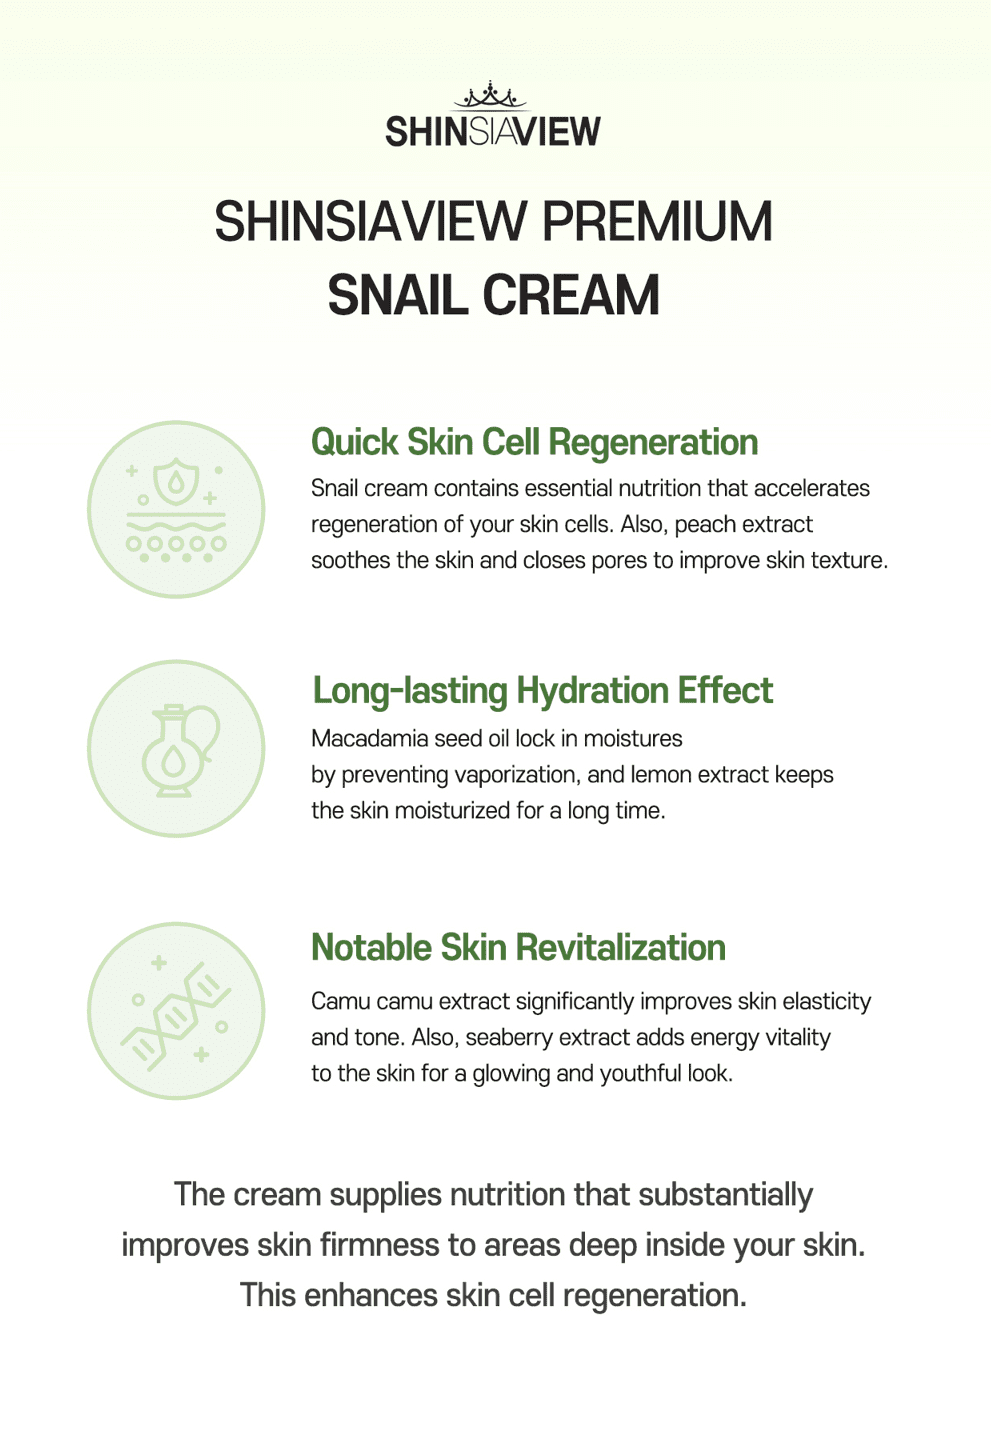 SHINSIAVIEW PREMIUM Snail Cream 30g - Kbeauty Canada